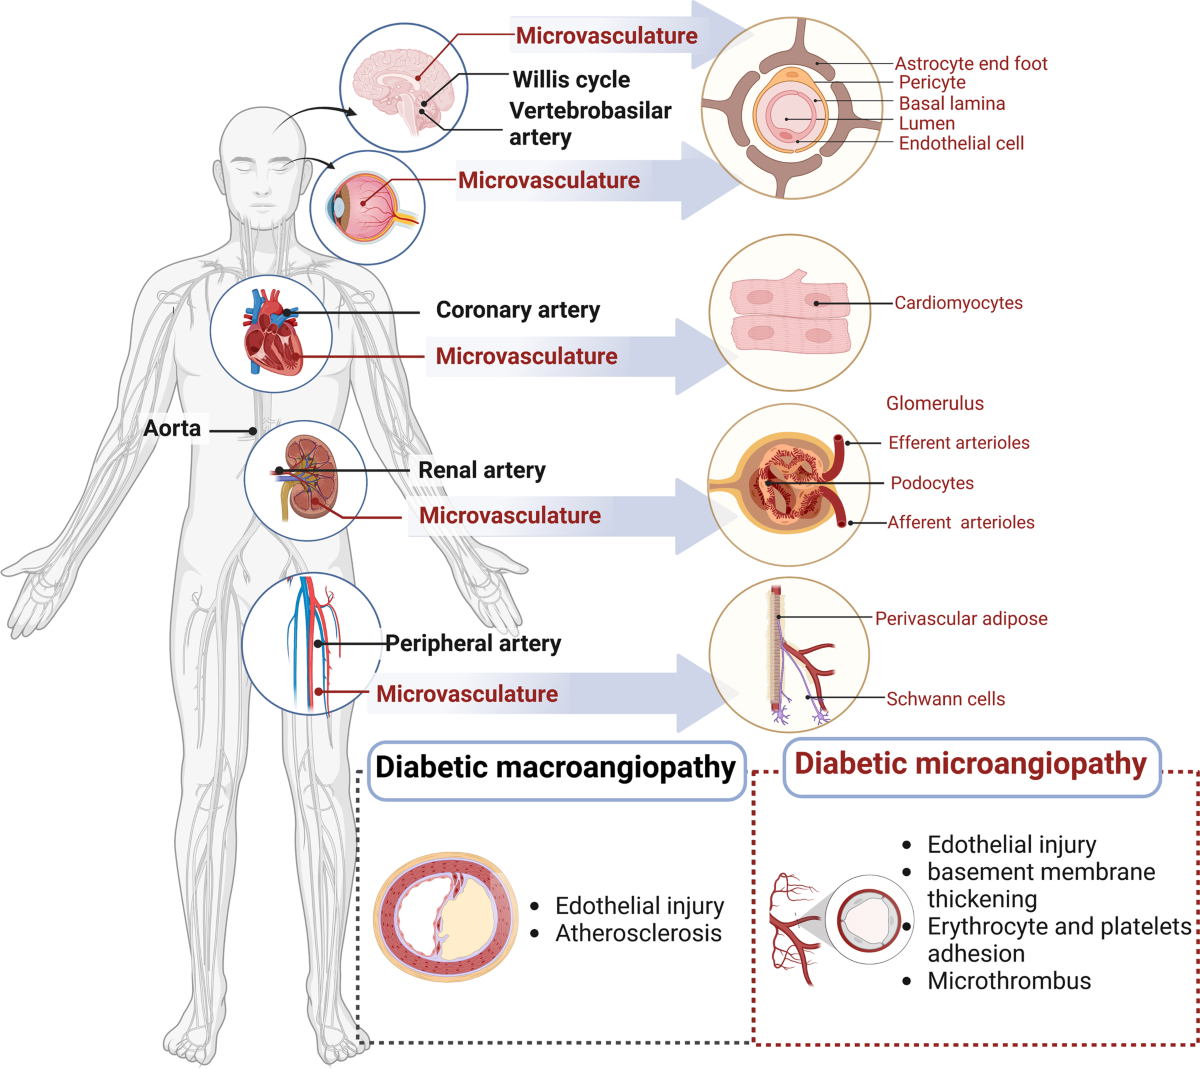 Diabetic vascular diseases: molecular mechanisms and therapeutic strategies